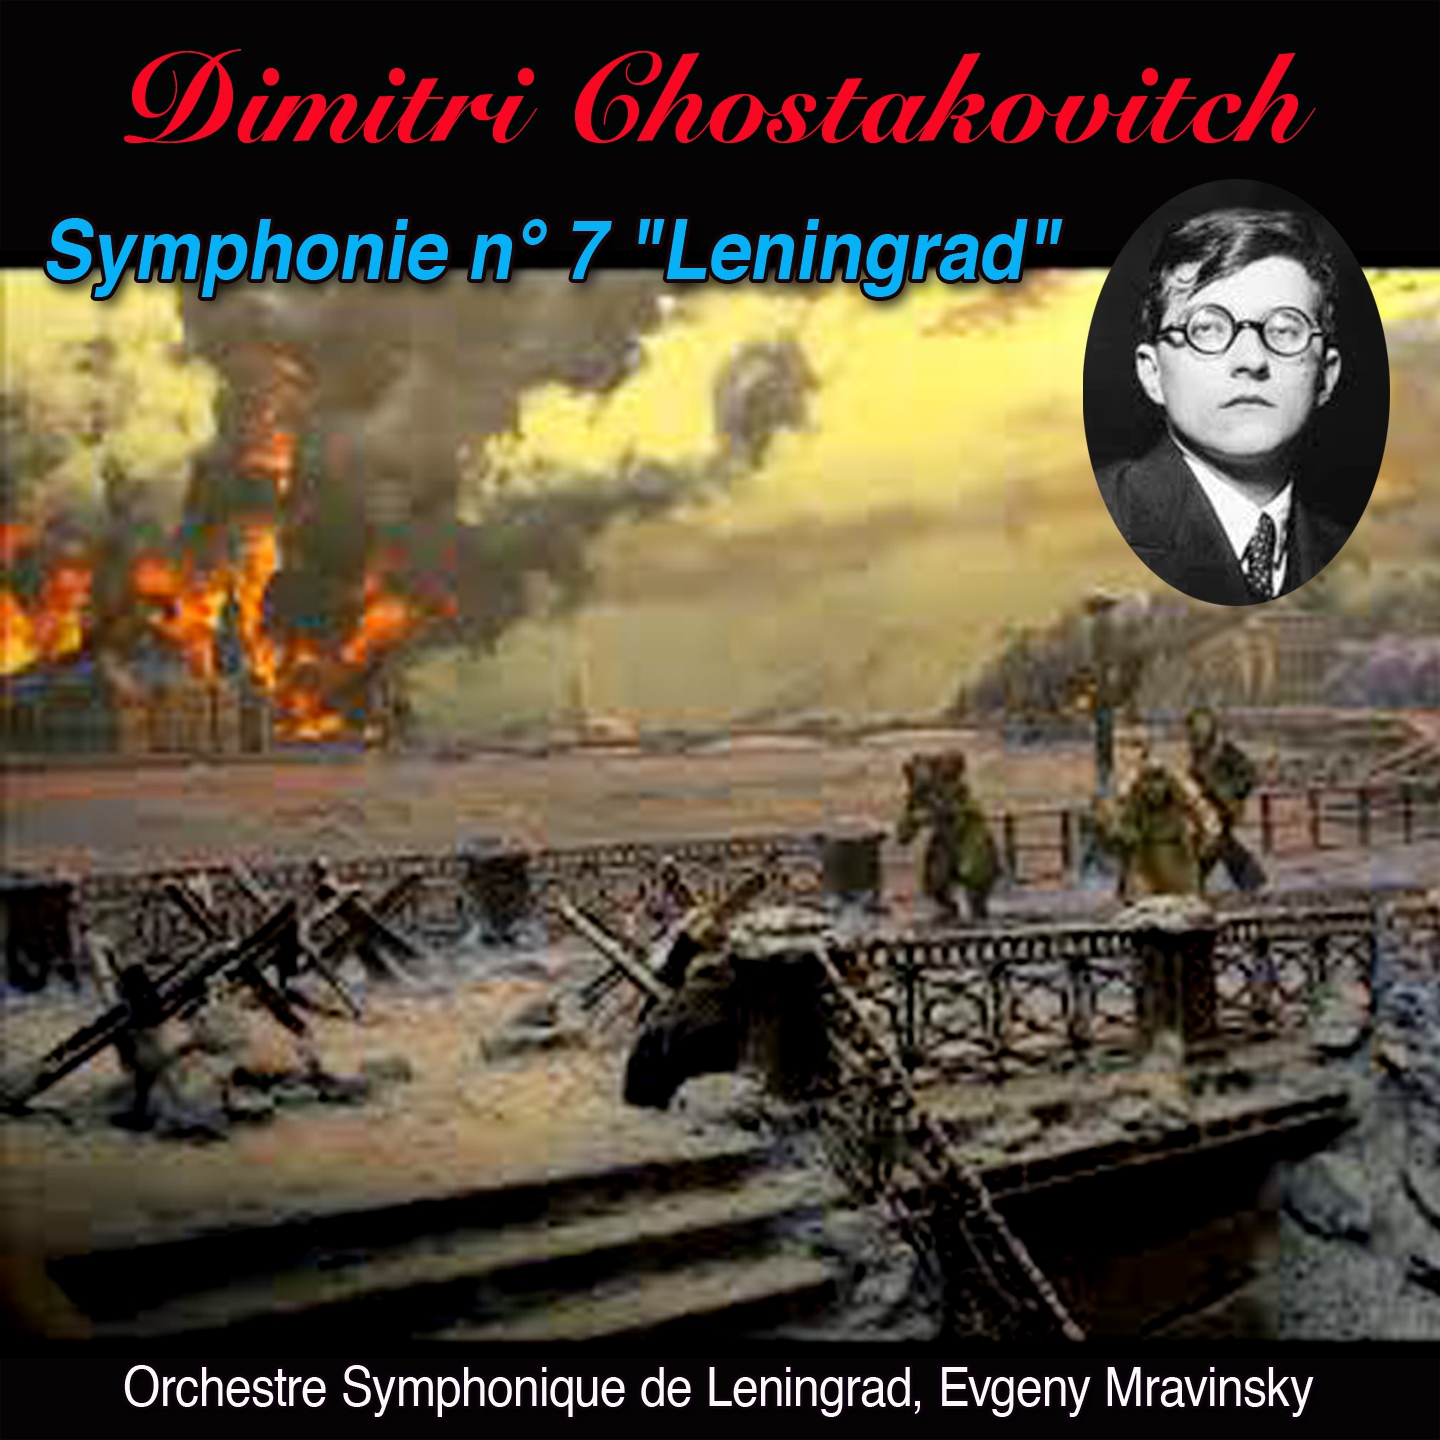 Leningrad allegretto (Symphonie n° 7 op. 60 en ut majeur "Leningrad")